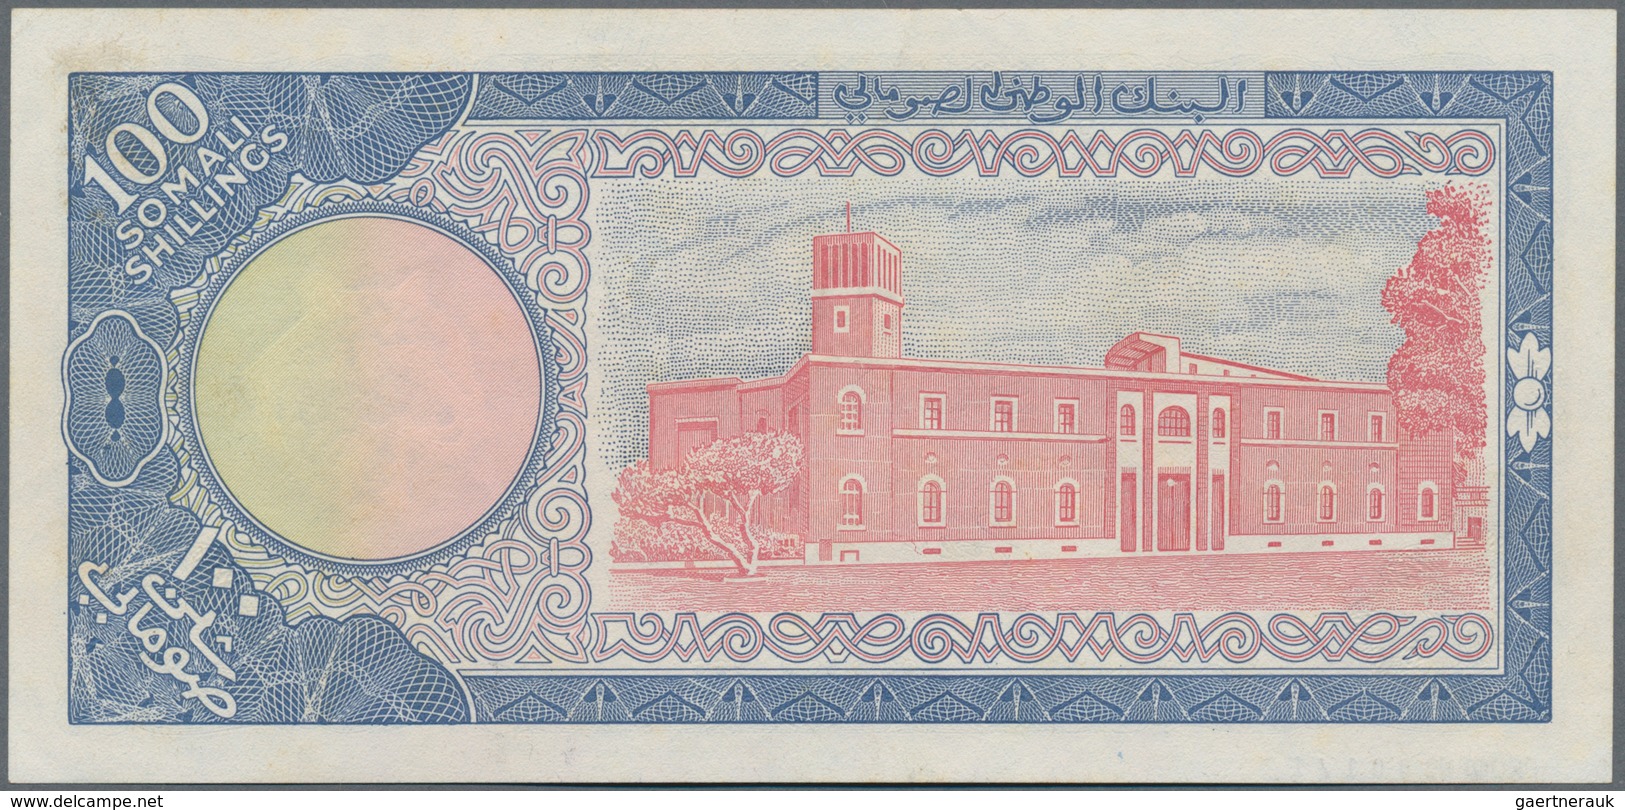 Somalia: Banca Nazionale Somala 100 Scellini 1966 SPECIMEN, P.8s, Soft Diagonal Fold At Center And U - Somalia